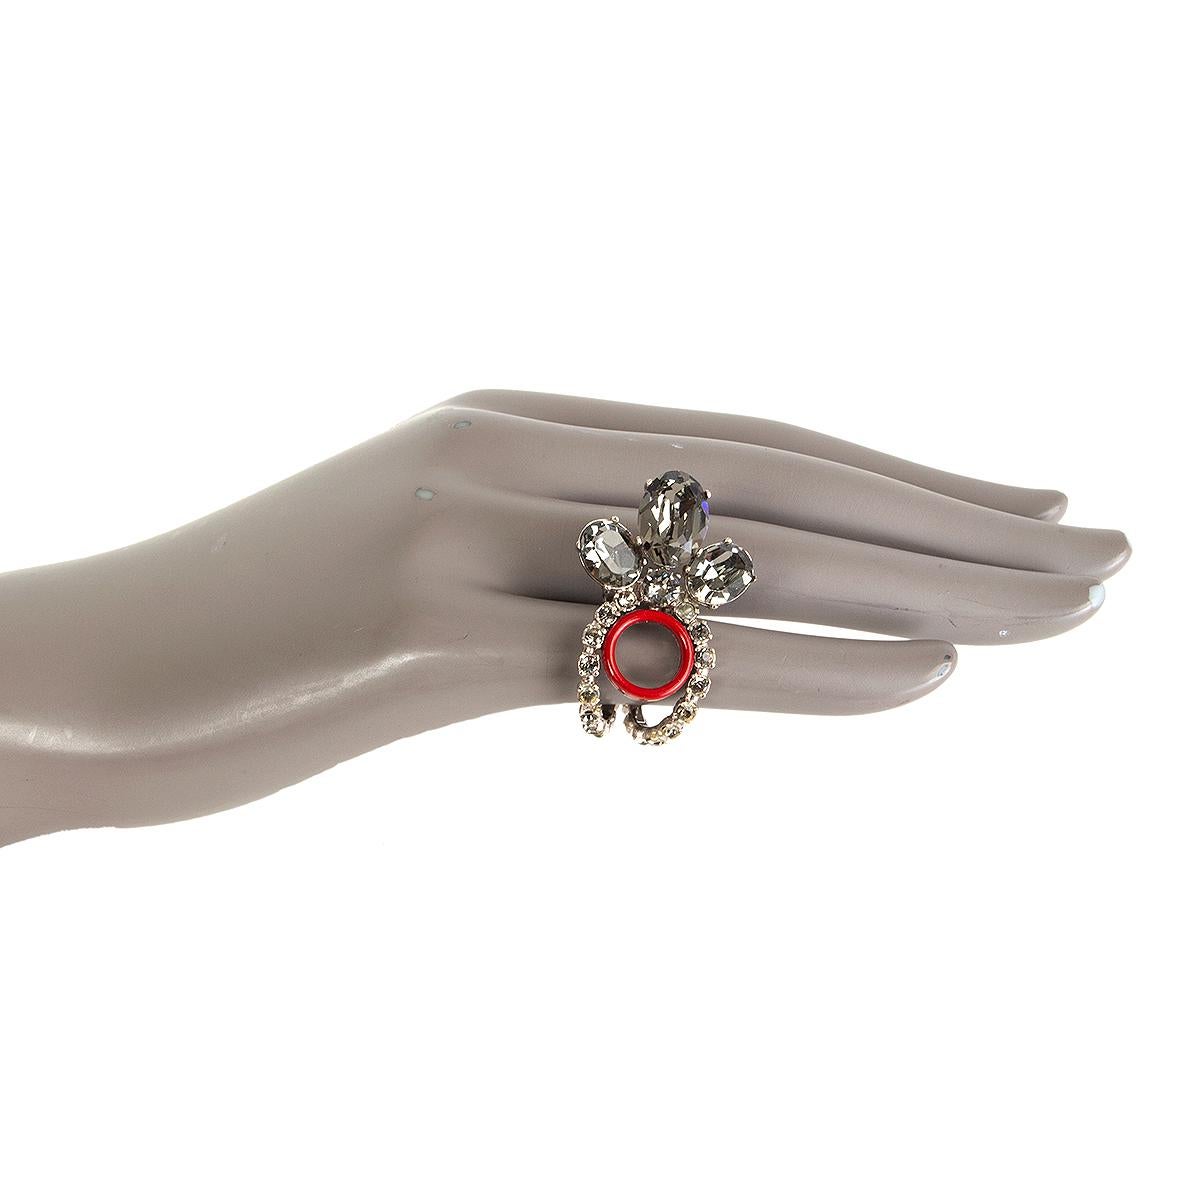 CHRISTIAN DIOR red & crystal embellished Ring Size L / 6 1